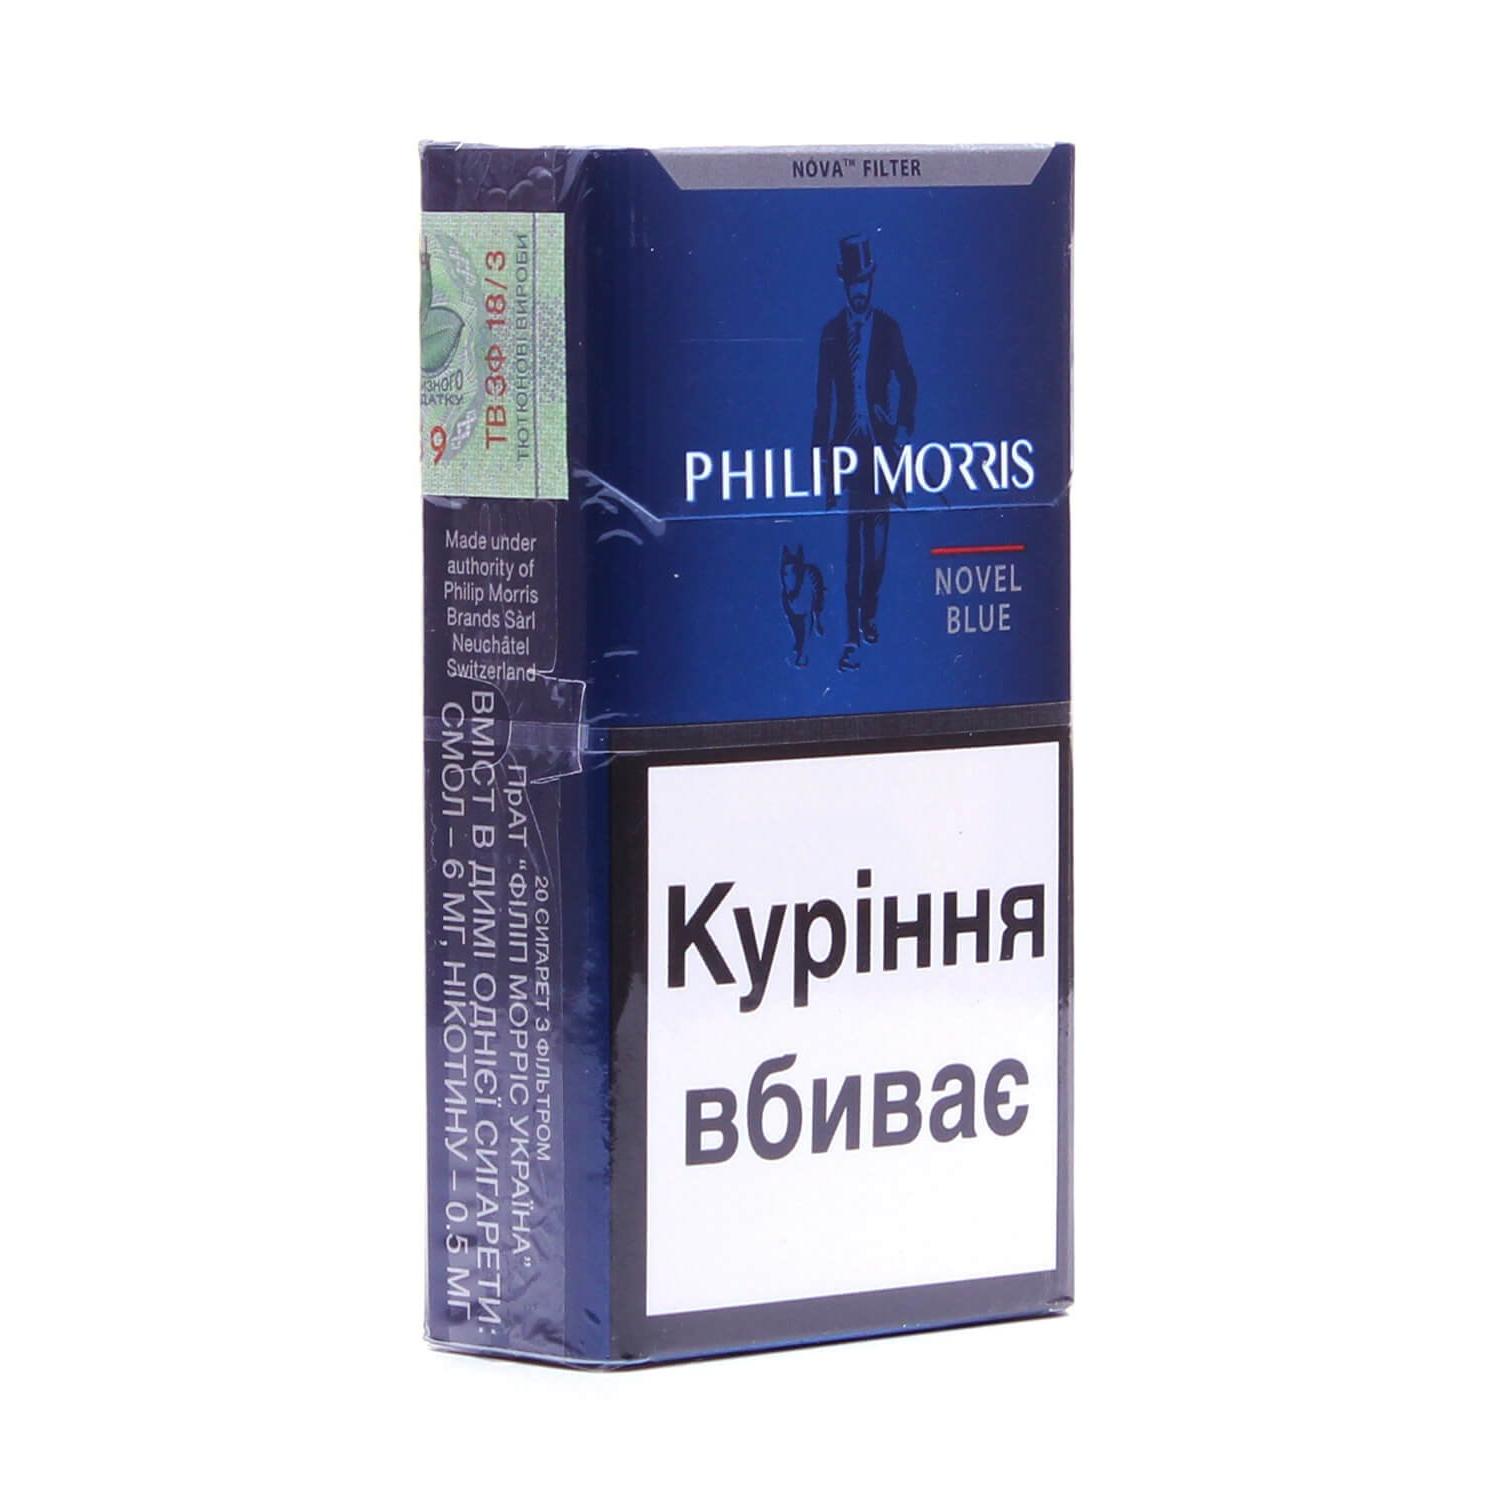 Филип моррис купить. Сигареты компании Филип Моррис. Марки сигарет компании Филипа Мориса. Philip Morris сигареты ассортимент.